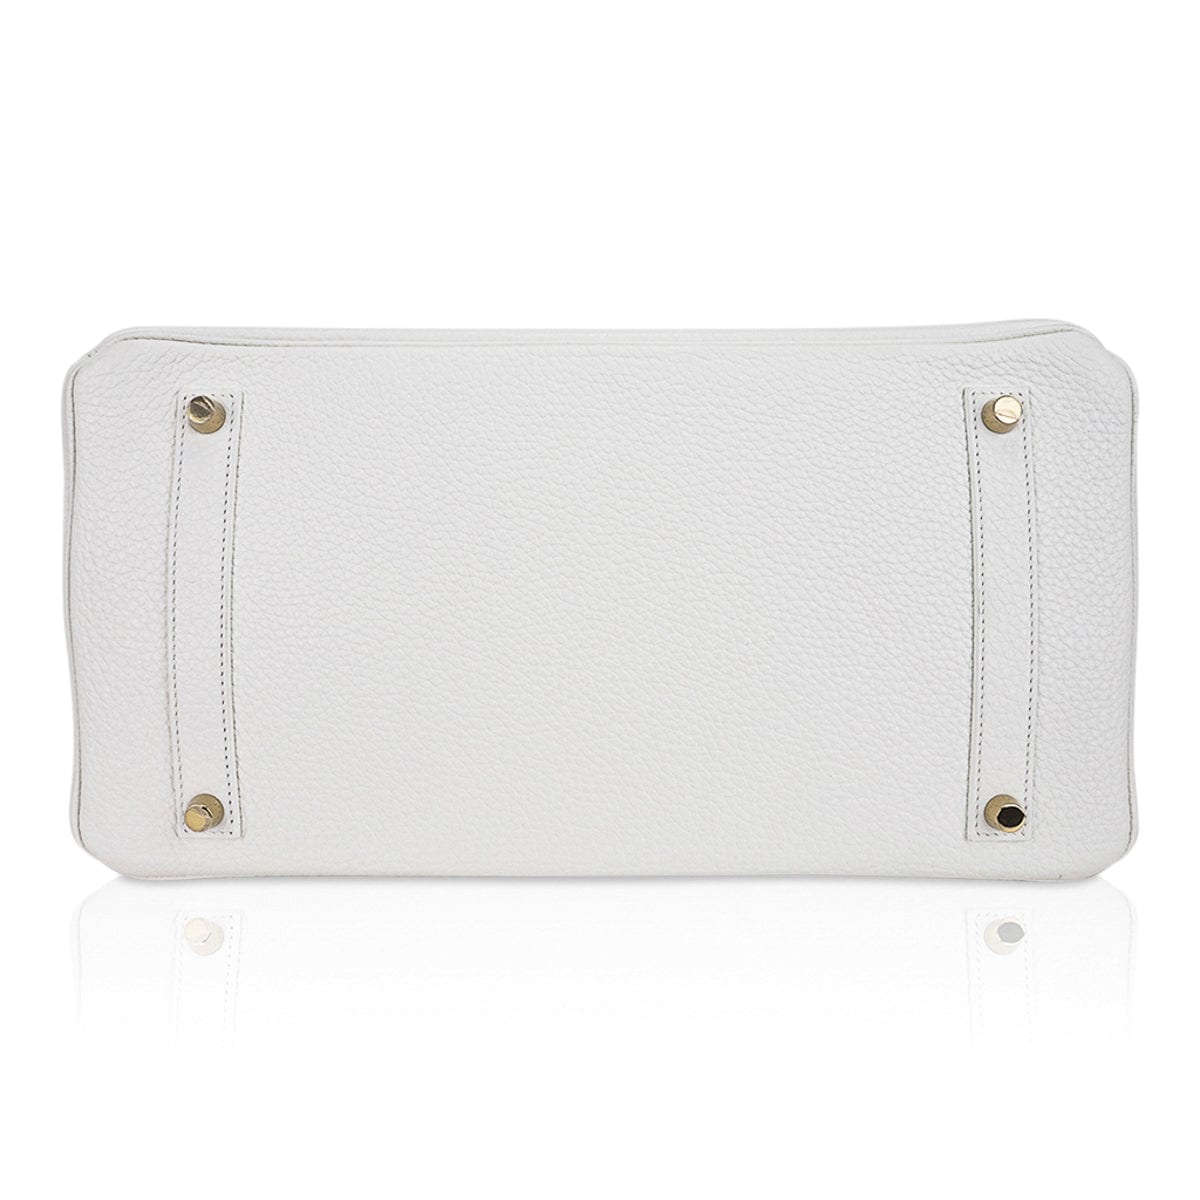 White Clemence Retourne Kelly 35 Gold Hardware, 2009, Handbags &  Accessories, 2022